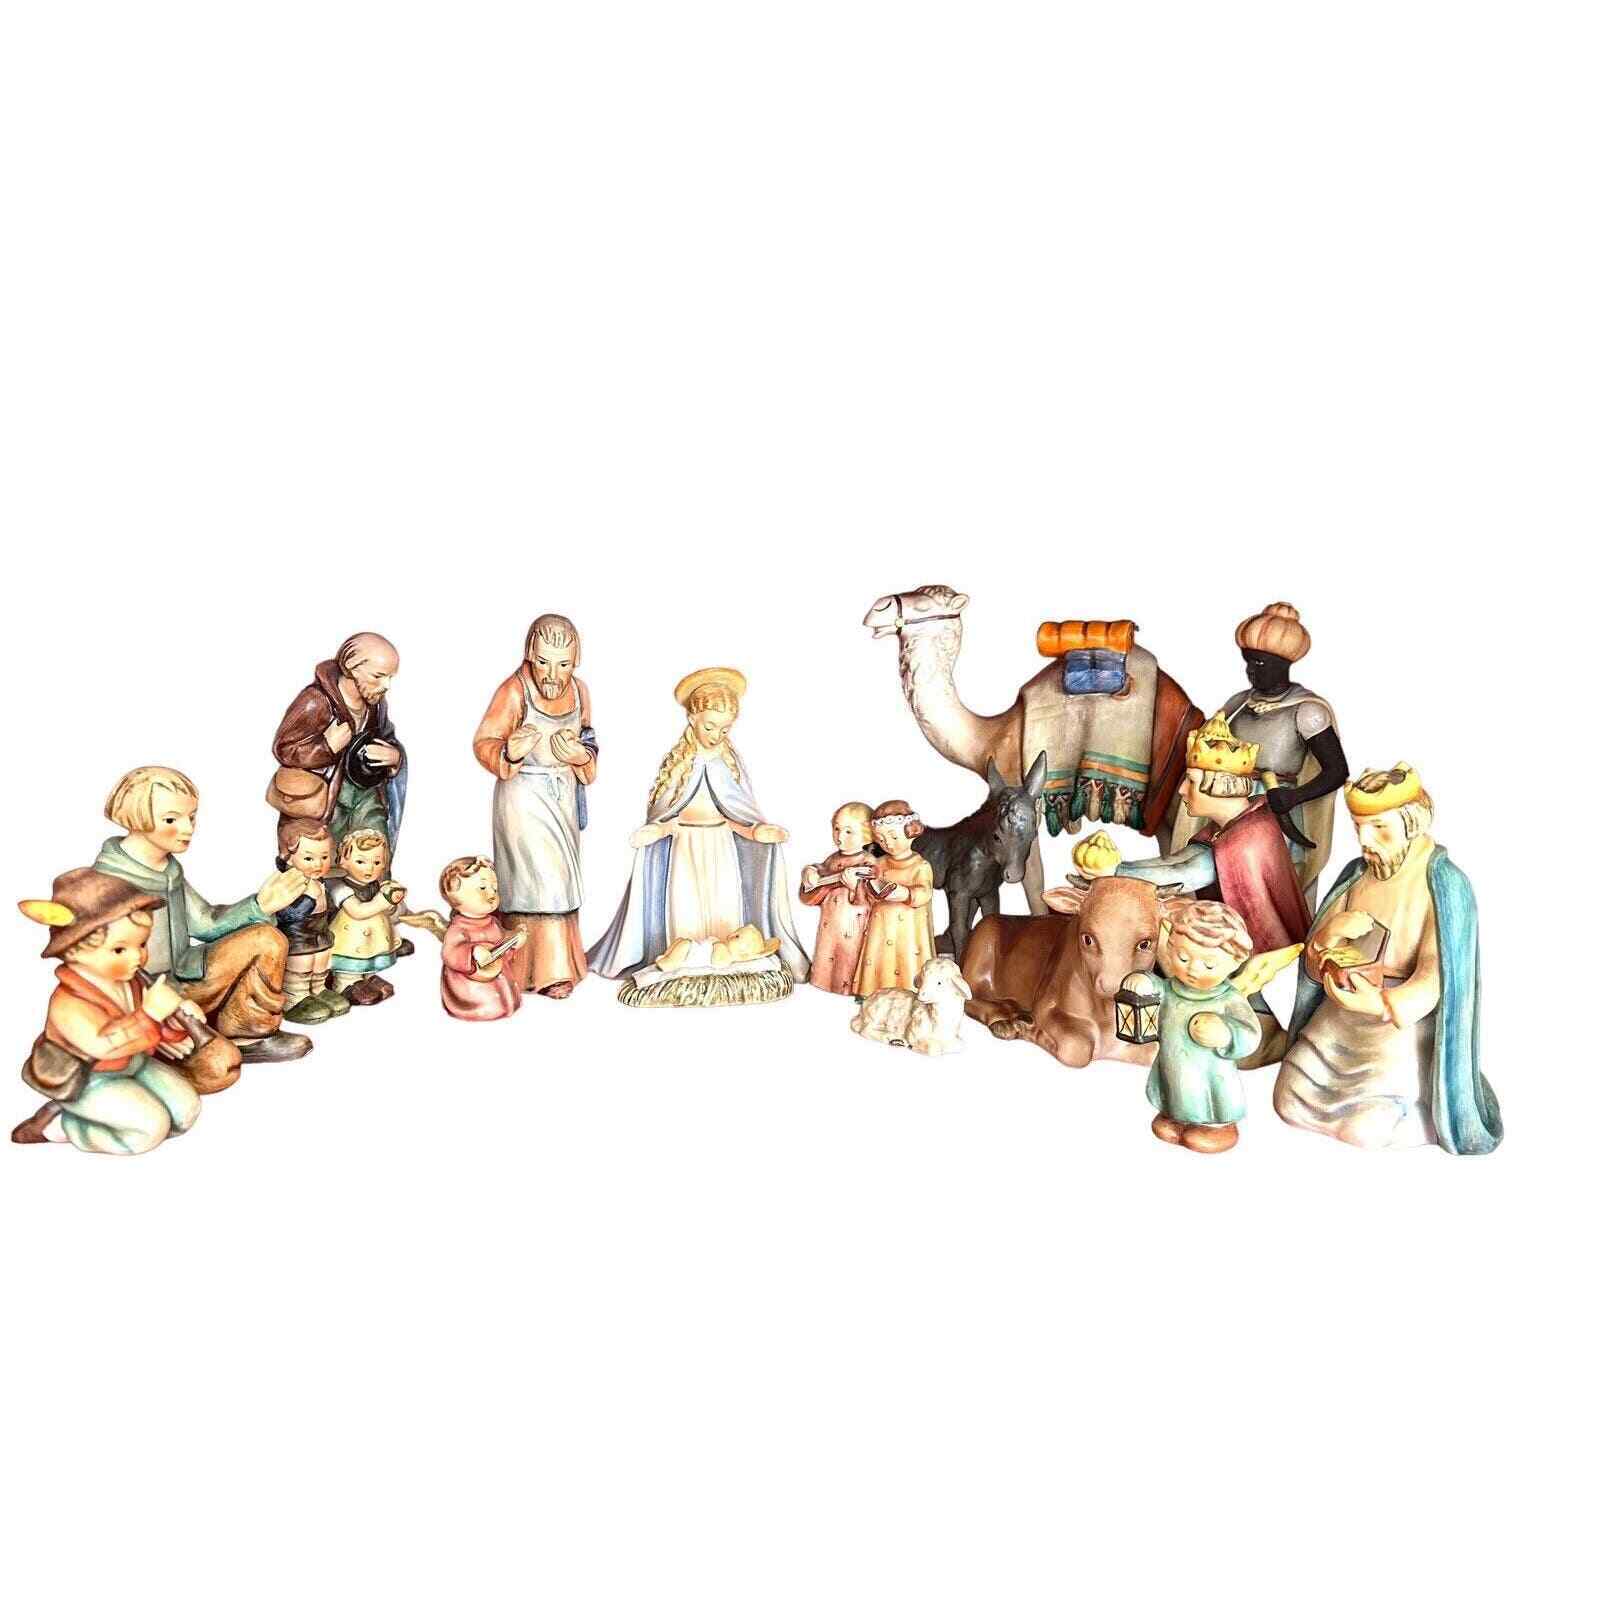 Hummel Christmas Nativity Set 17 Pieces TMK 1-4 From West Germany 1950’s *Read*